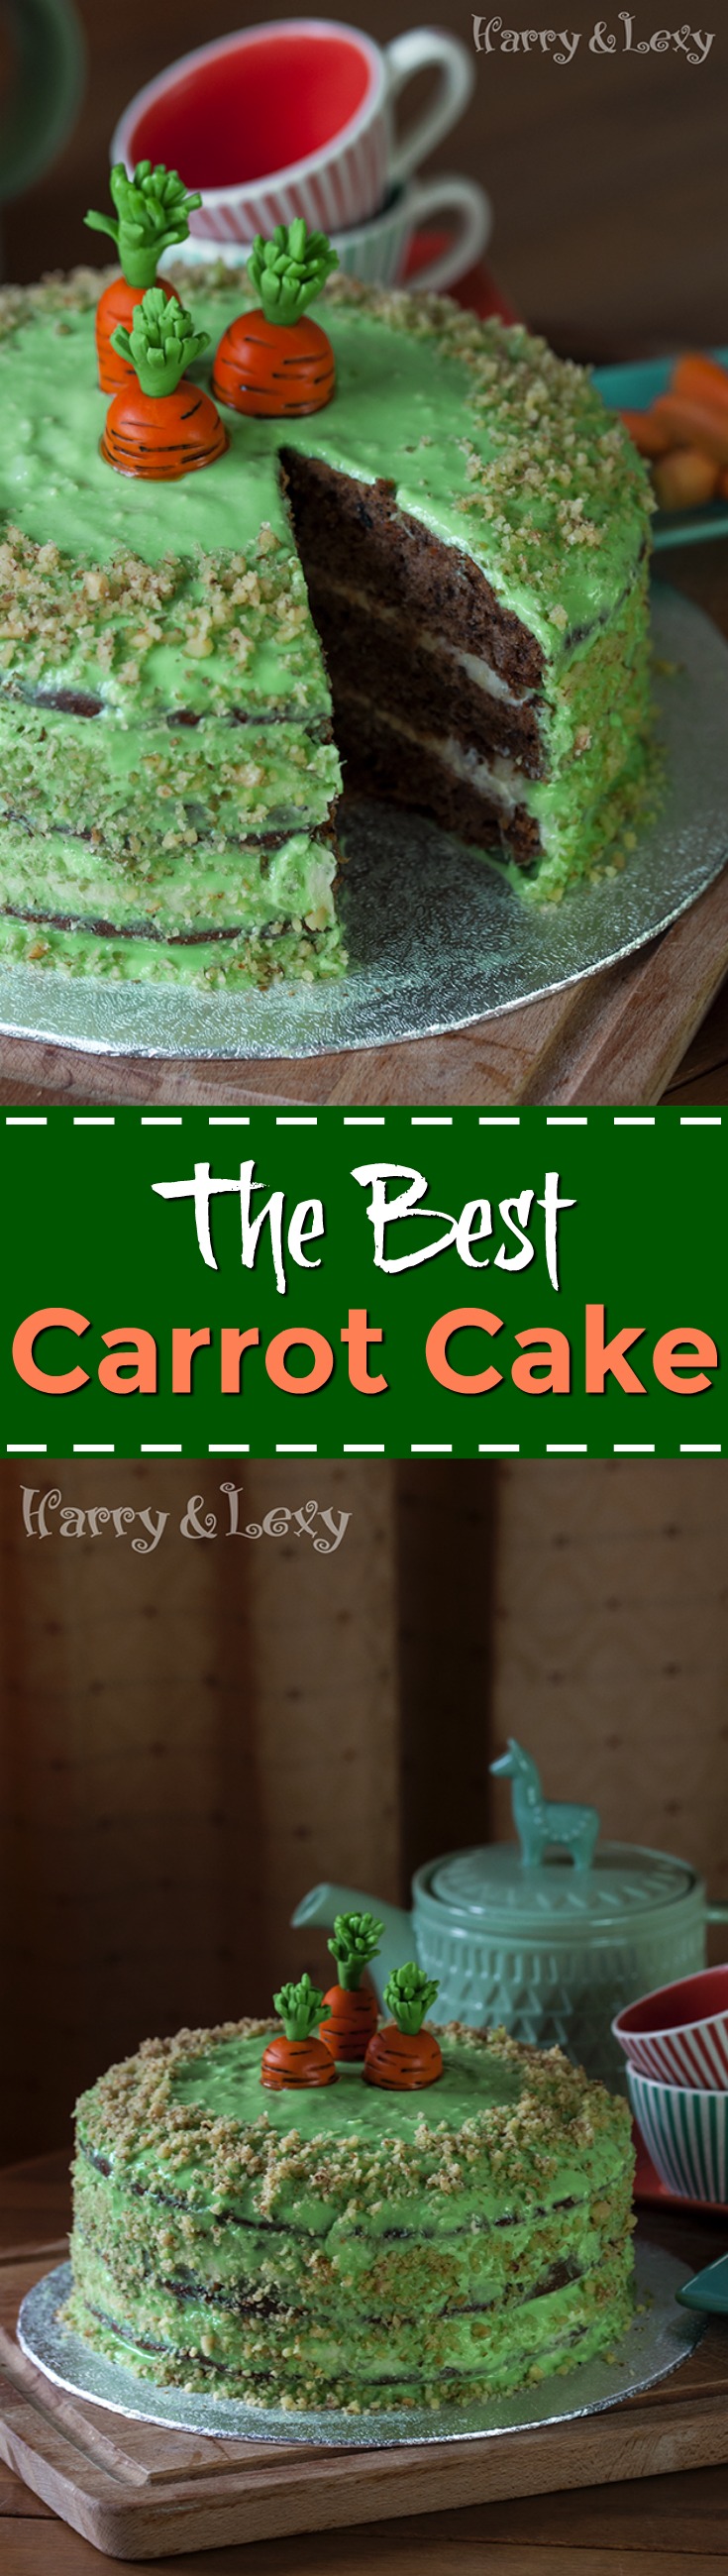 The Best Carrot Cake